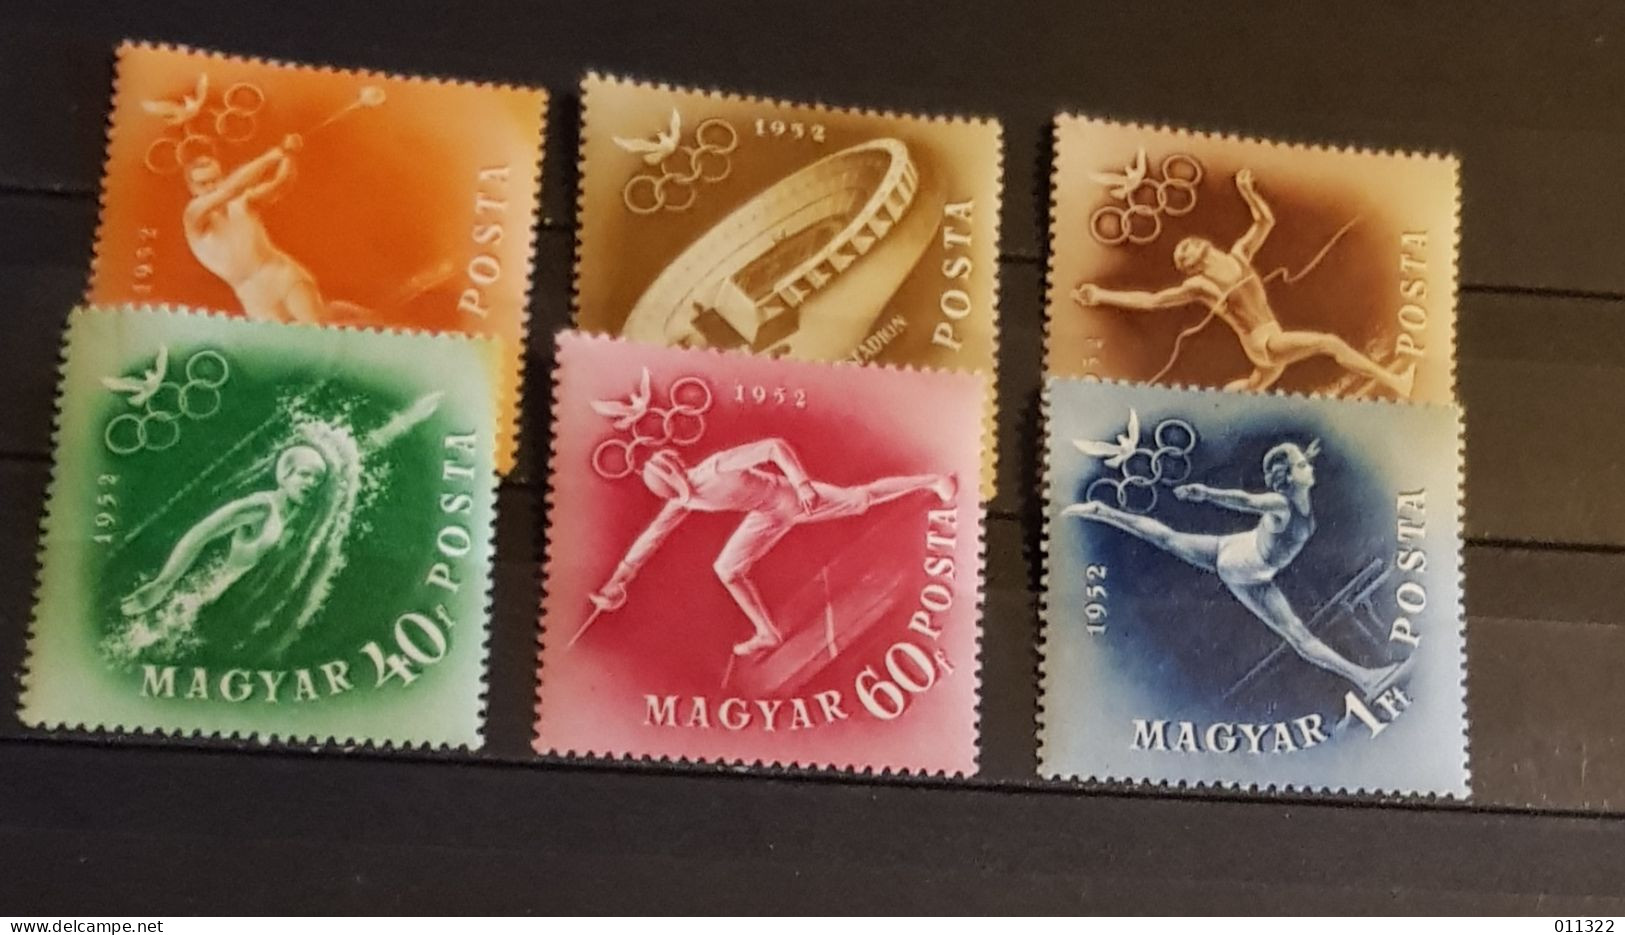 HUNGARY OLYMPIC GAMES HELSINKI SET MNH - Summer 1952: Helsinki